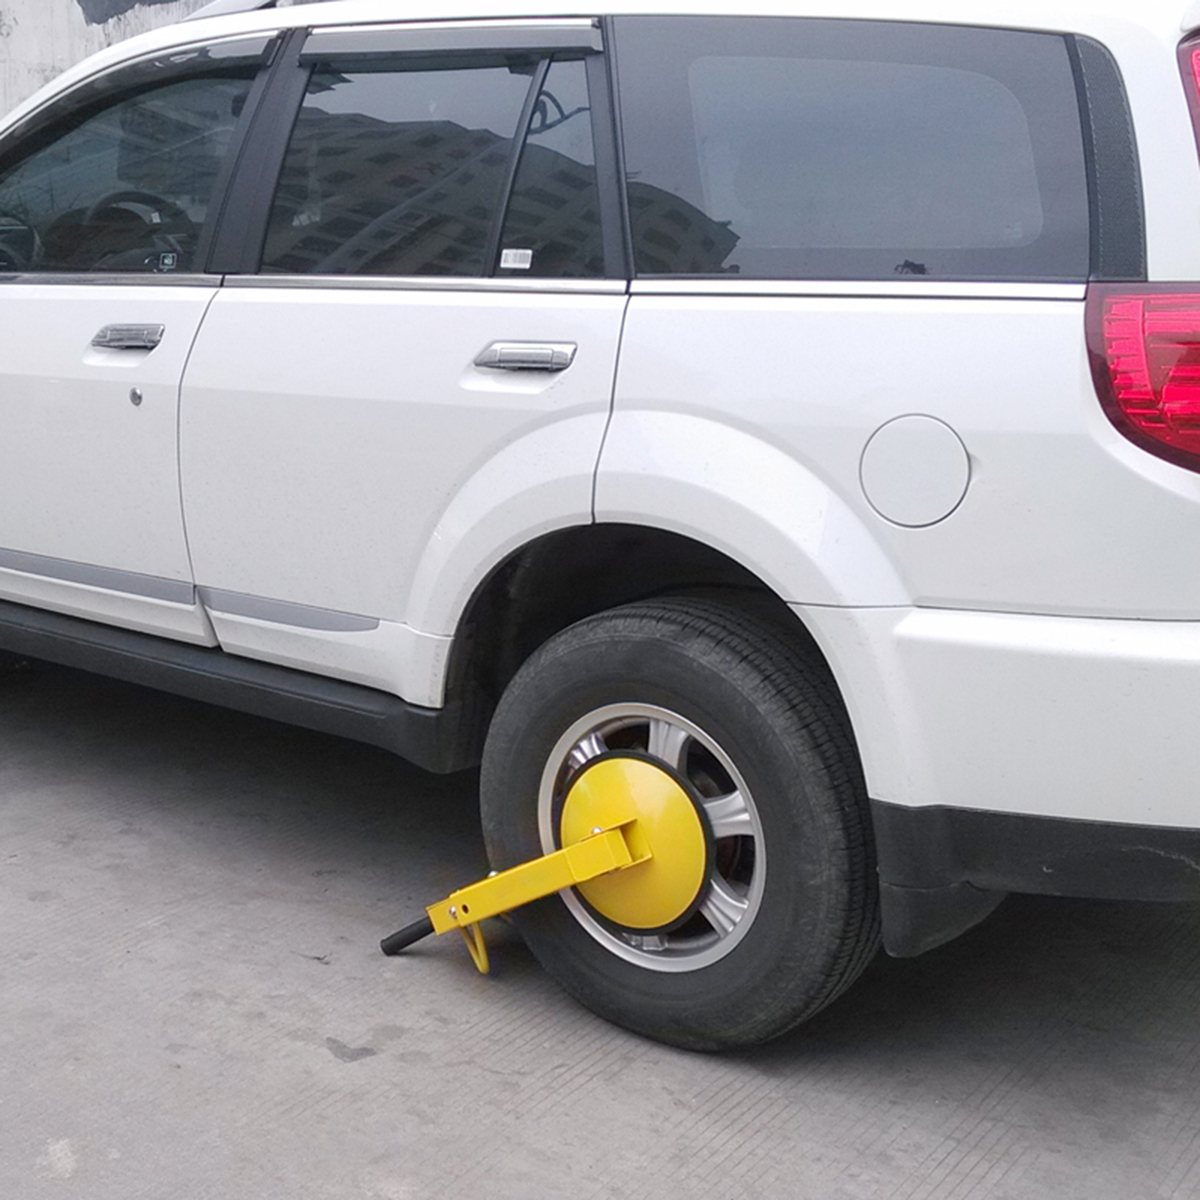 30.48 cm Tyre Width Tire Claw Lock for Car Caravan Van Trailers atvs OKLEAD Anti Theft Wheel Clamp Lock-Security Clamps Trailers Locks Boot MAX 12